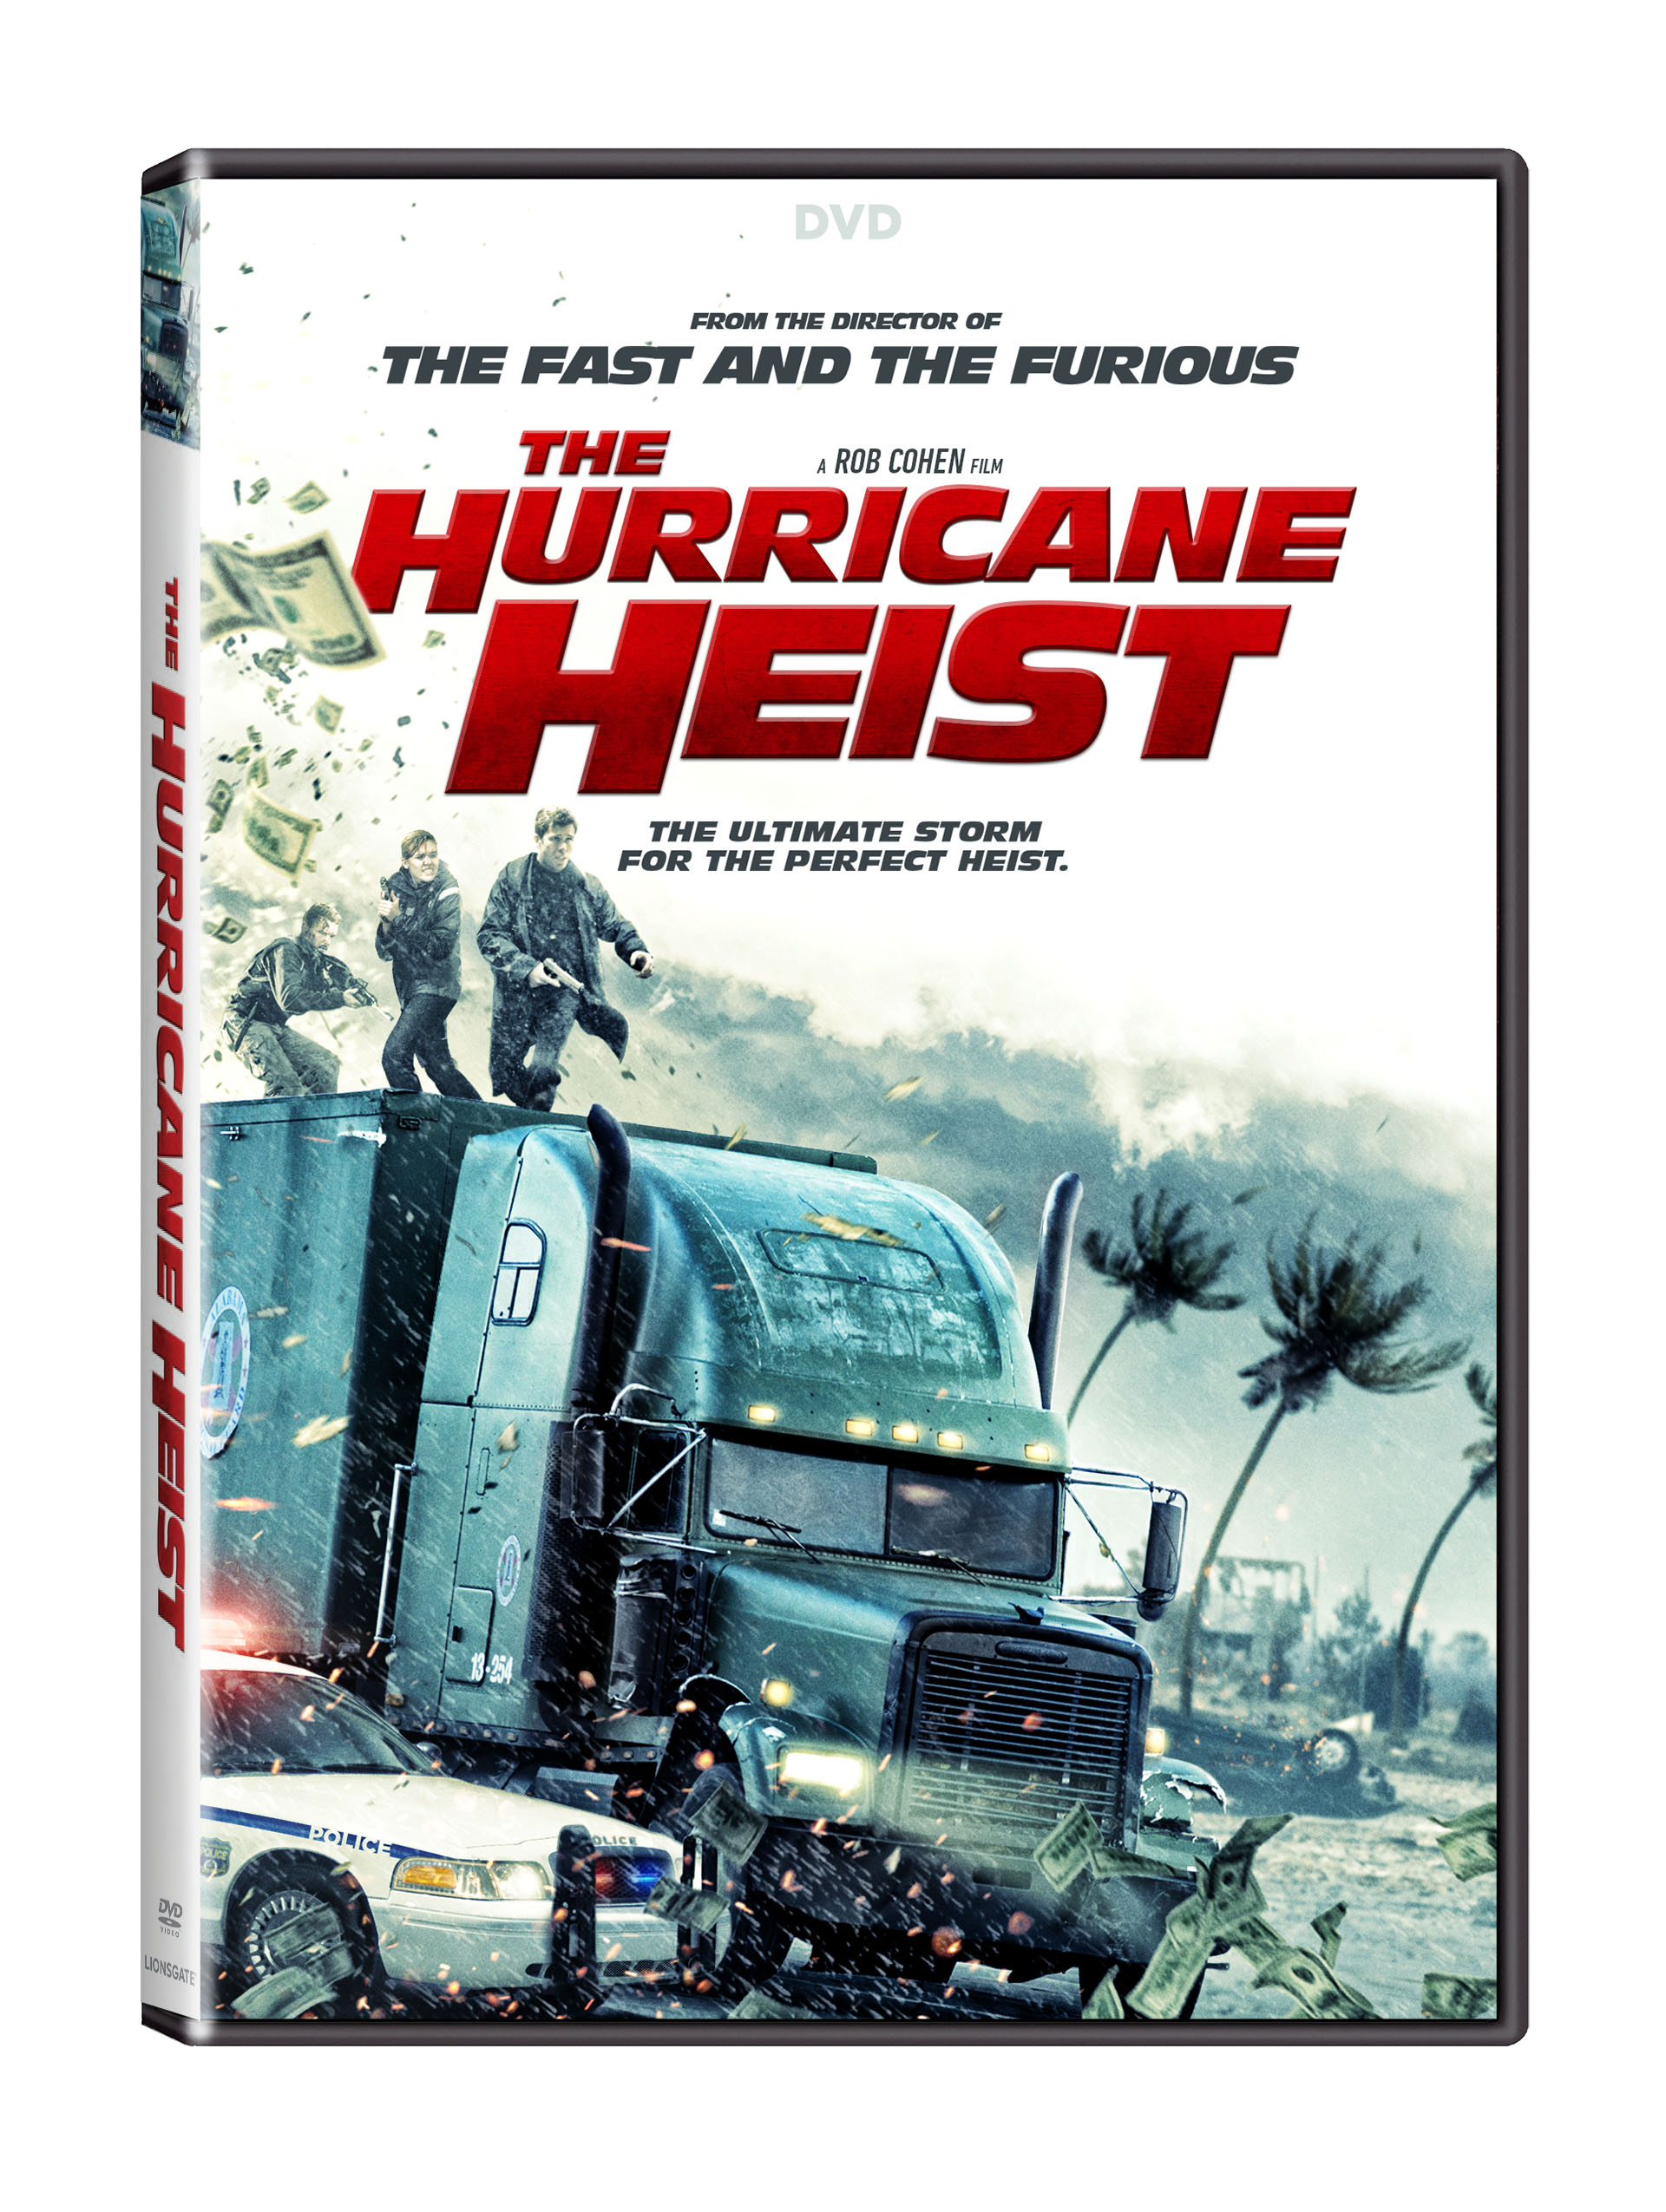 The Hurricane Heist DVD cover (Lionsgate Home Entertainment)